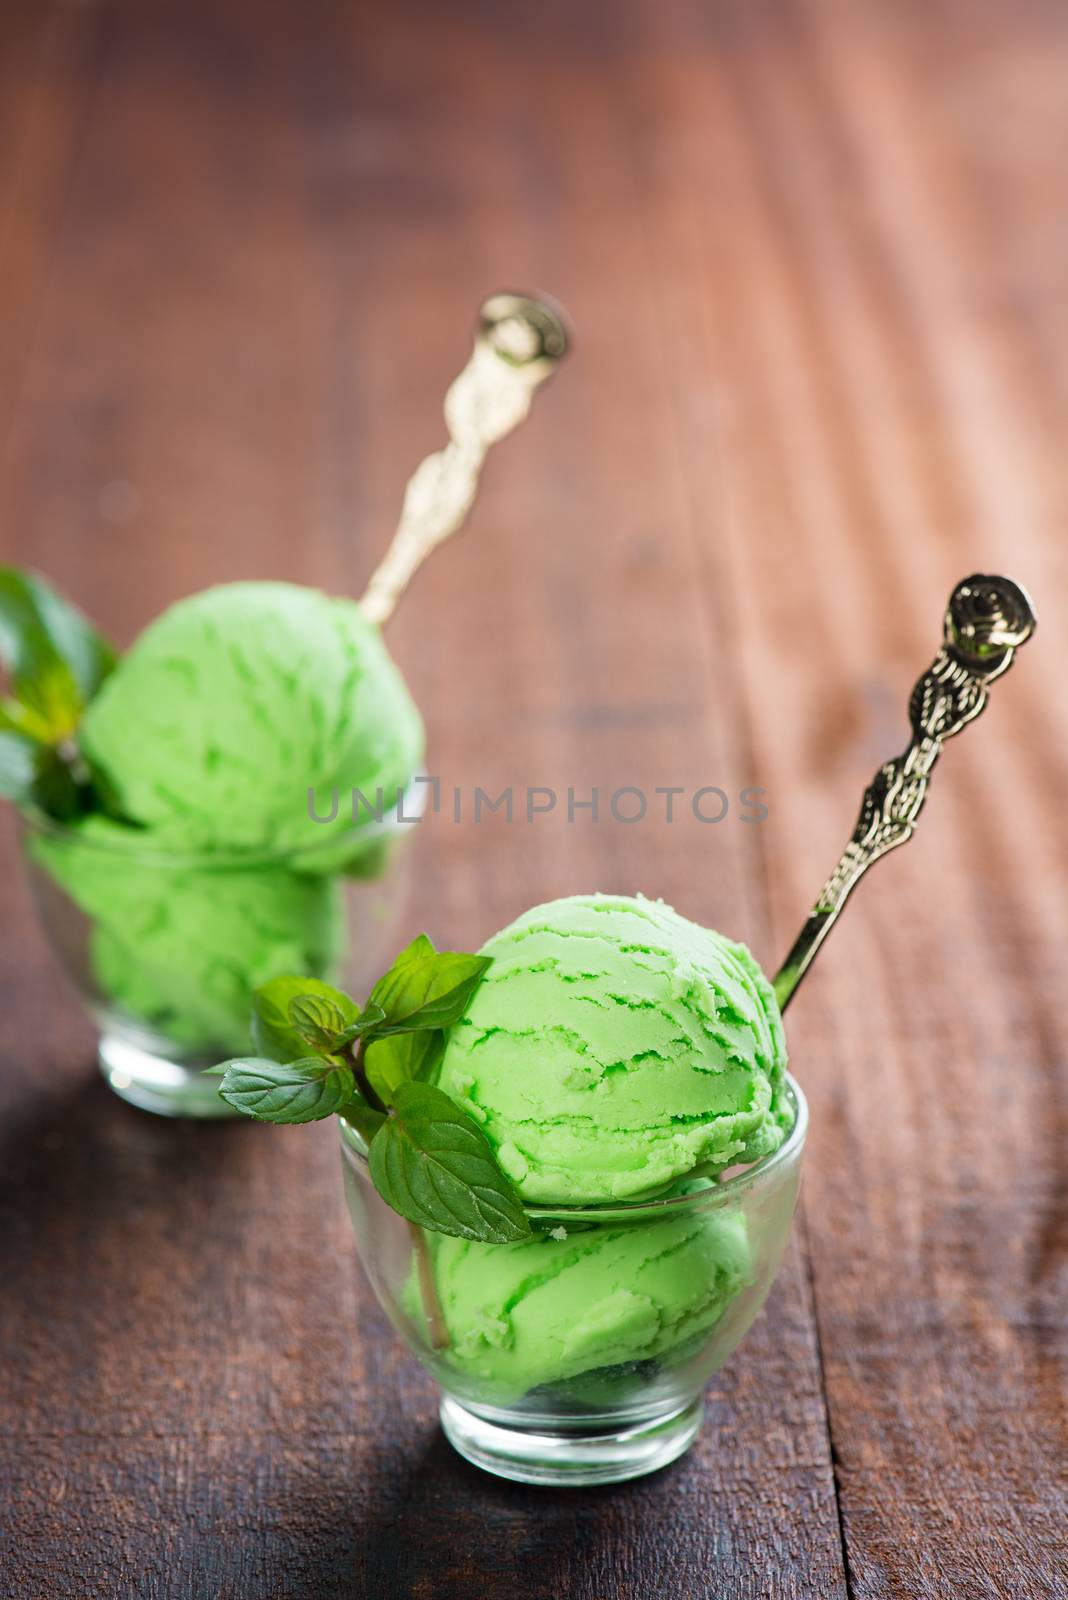 pistachio ice cream in cups by szefei